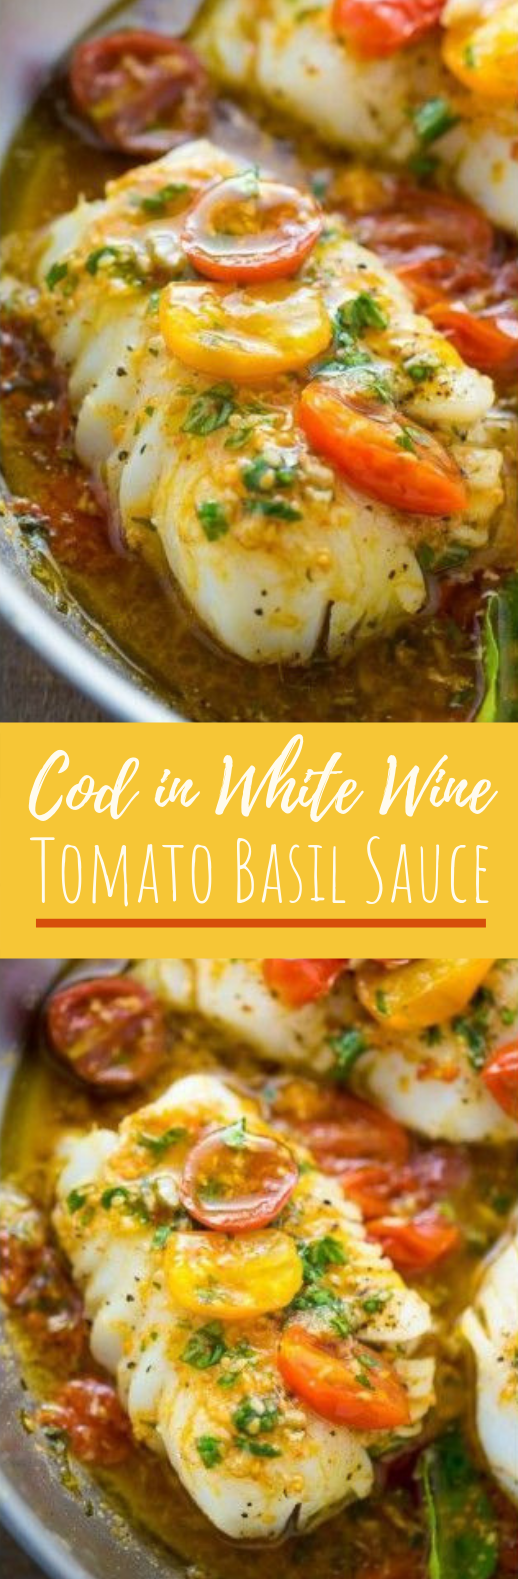 Cod in White Wine Tomato Basil Sauce #fish #seafood